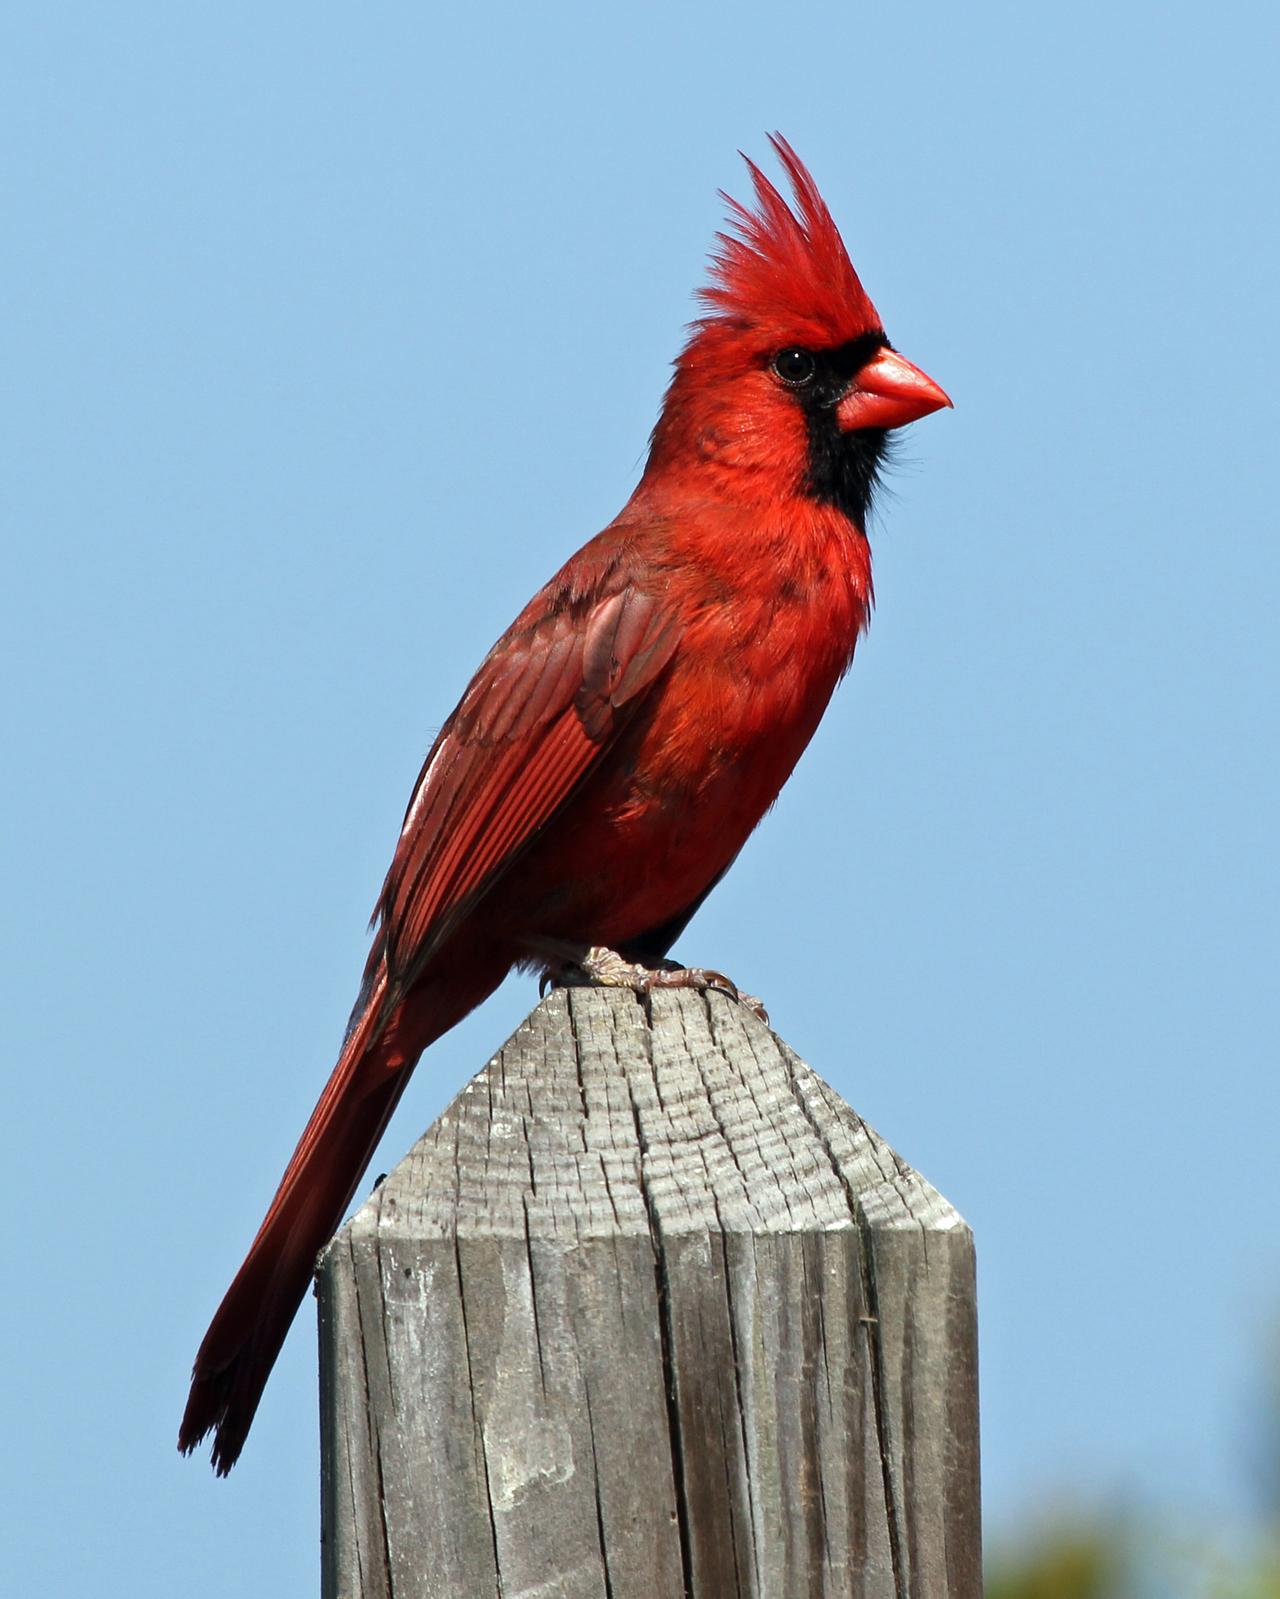 Northern Cardinal Photo by Robert Polkinghorn